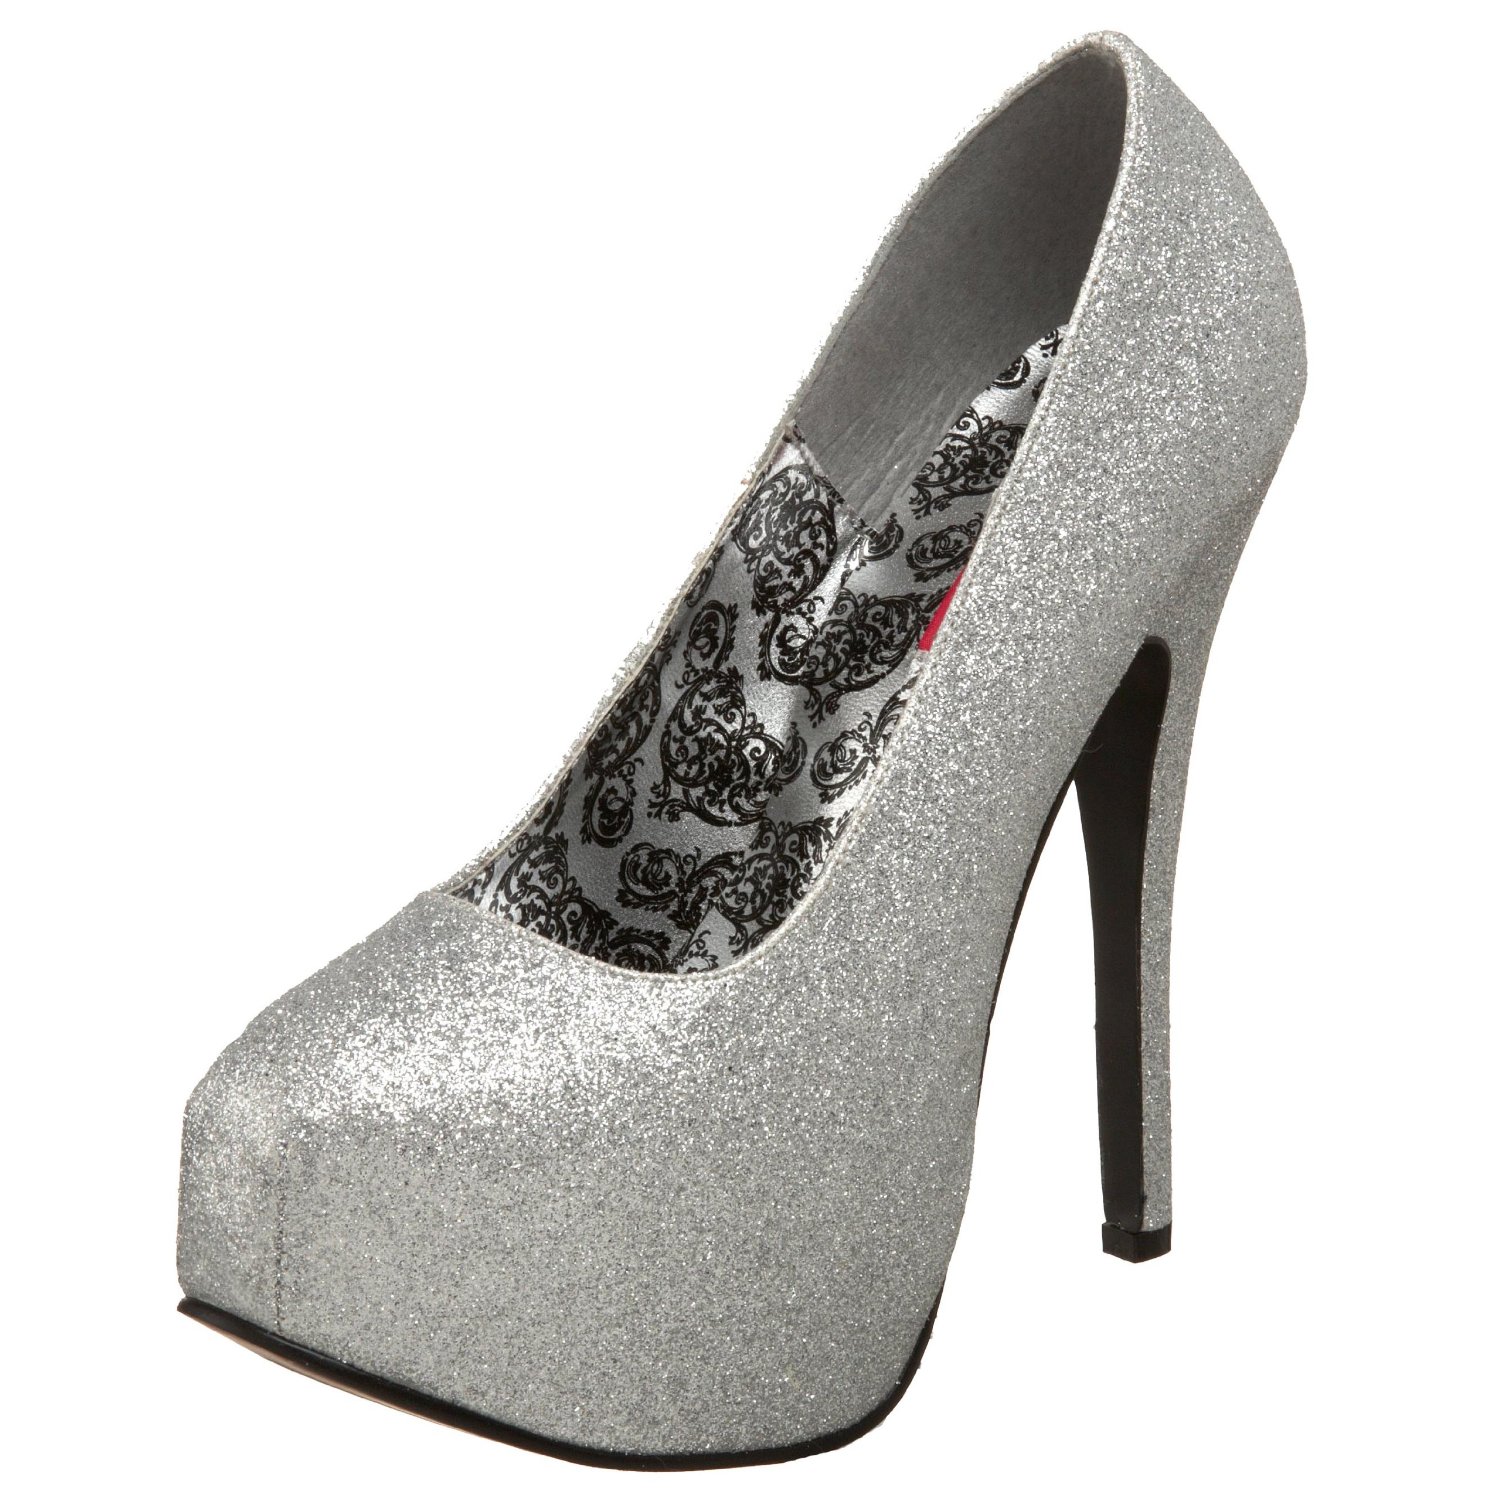 teez high heel pumps golden glitter sparkly high heel shoes